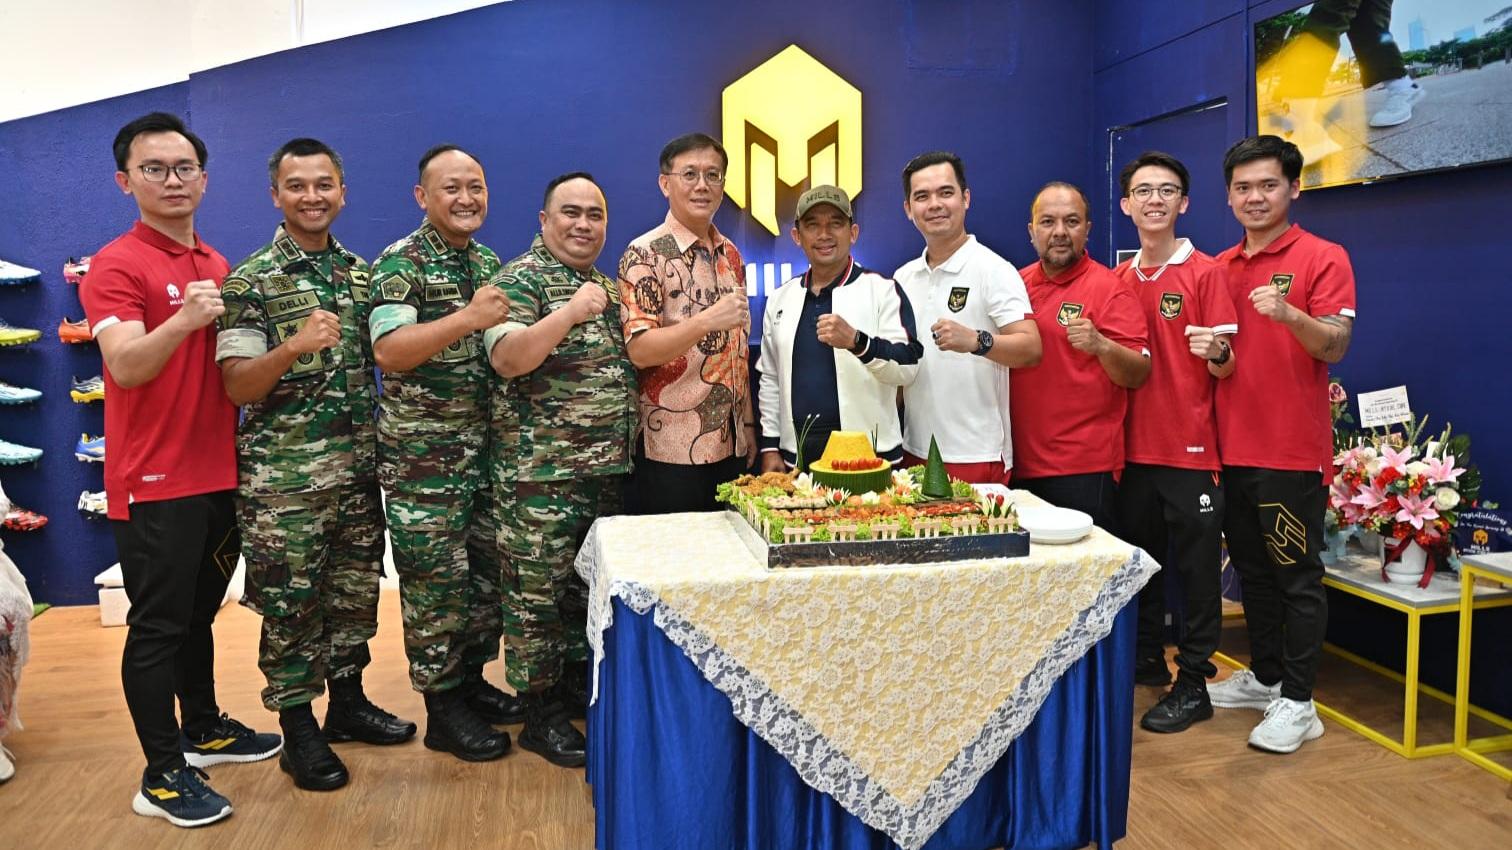 Apparel timnas Indonesia, Mills, buka cabang baru di Medan. - INDOSPORT